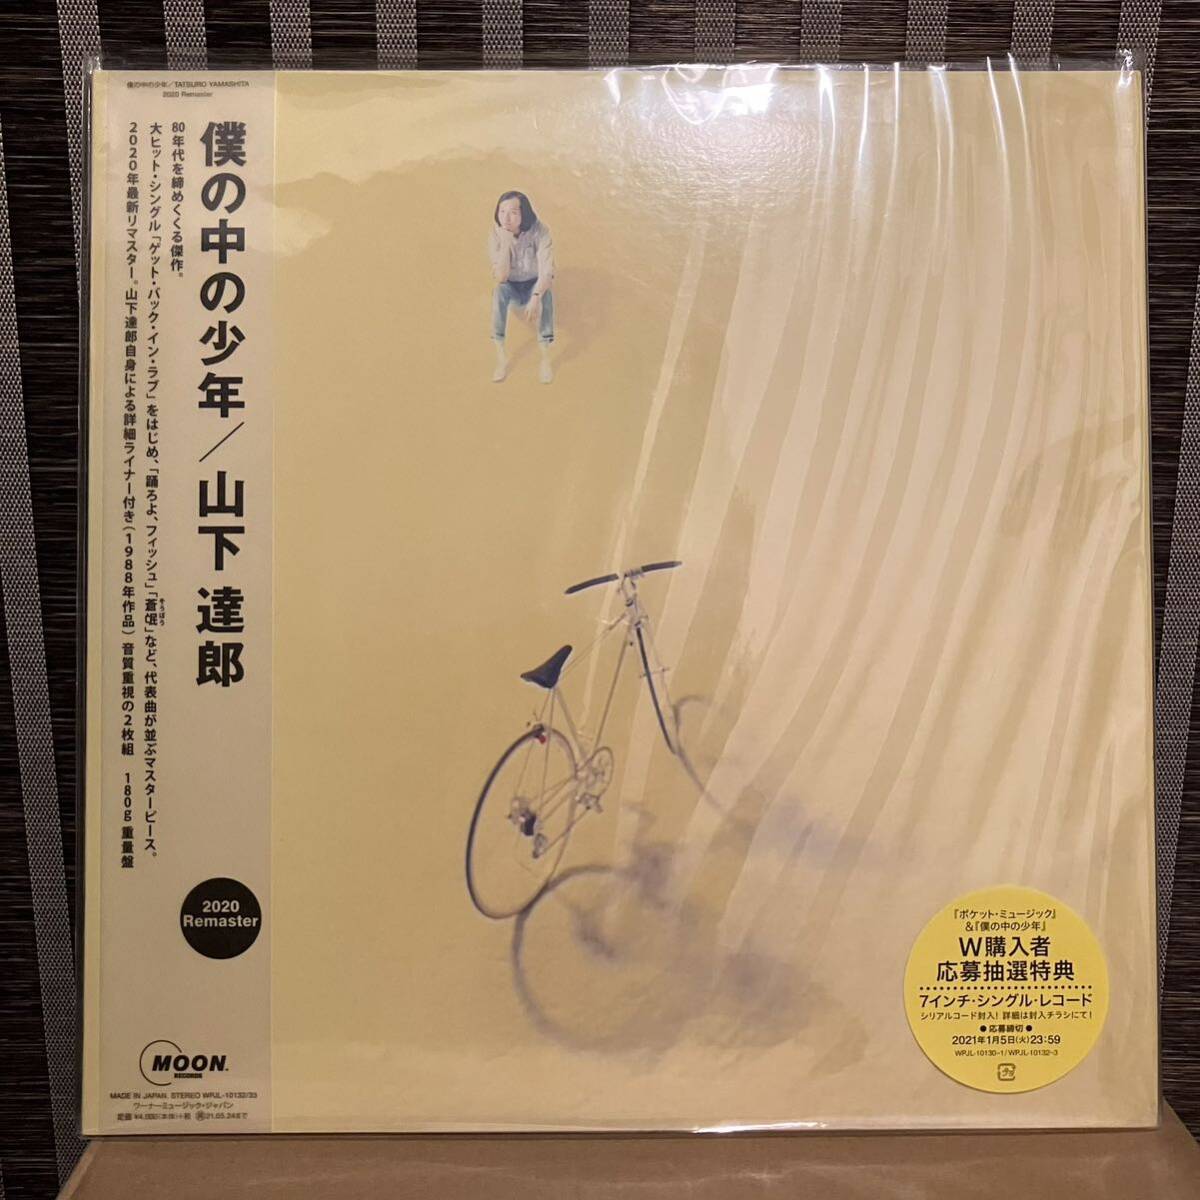 【LP+CD】山下達郎 僕の中の少年 2020年リマスター アナログレコード 180g重量盤_画像2